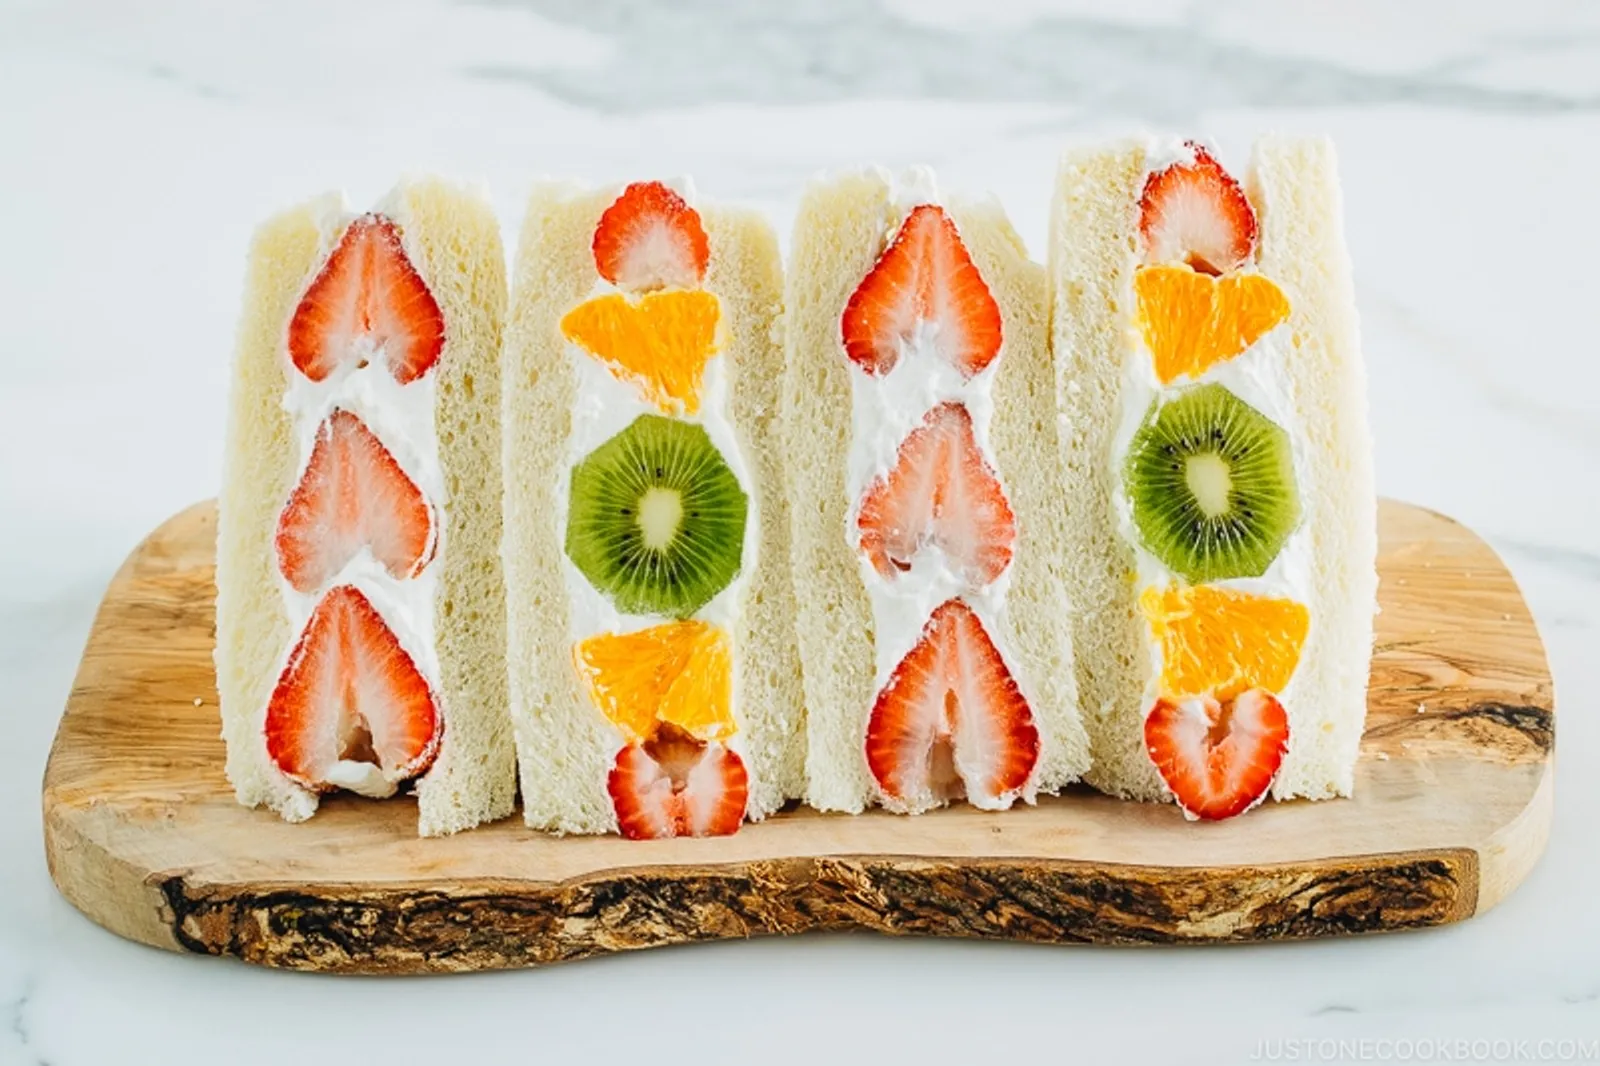 Resep Fruit Sando Khas Jepang, Olahan Sandwich Penuh Gizi dan Vitamin